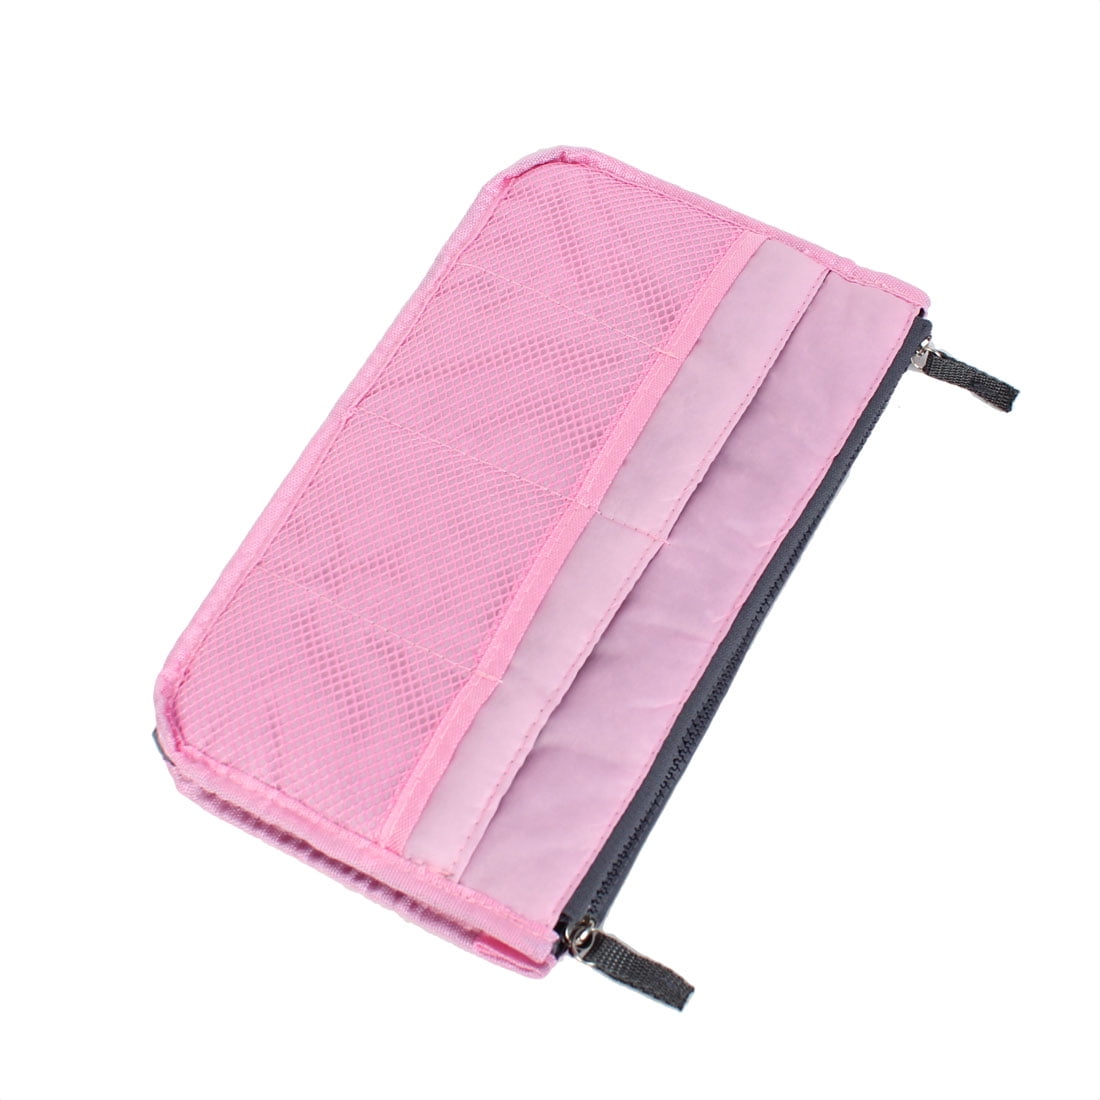 Pink Cosmetic Makeup Storage Handbag Tote Insert Purse Organizer Pouch Bag | Walmart Canada